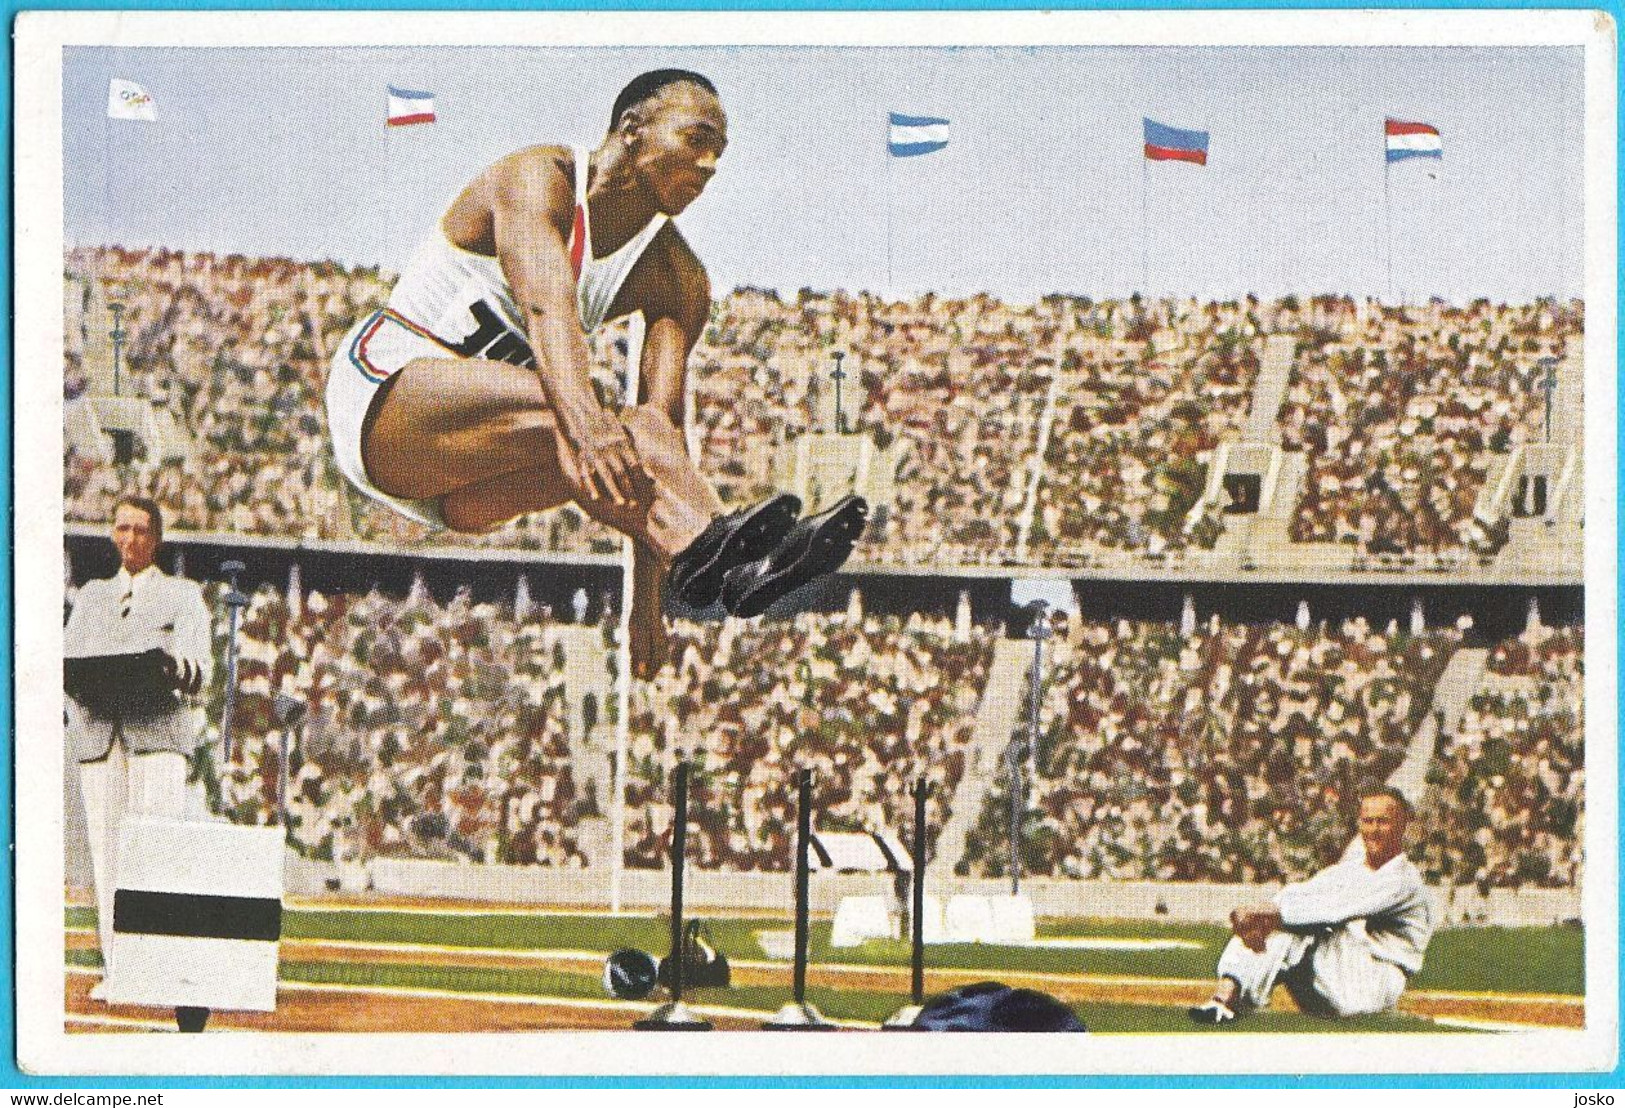 JESSE OWENS (USA) - Olympic Games 1936 Berlin * GOLD - LONG JUMP * Original Old Card * Athletics Athletisme Atletica - Tarjetas